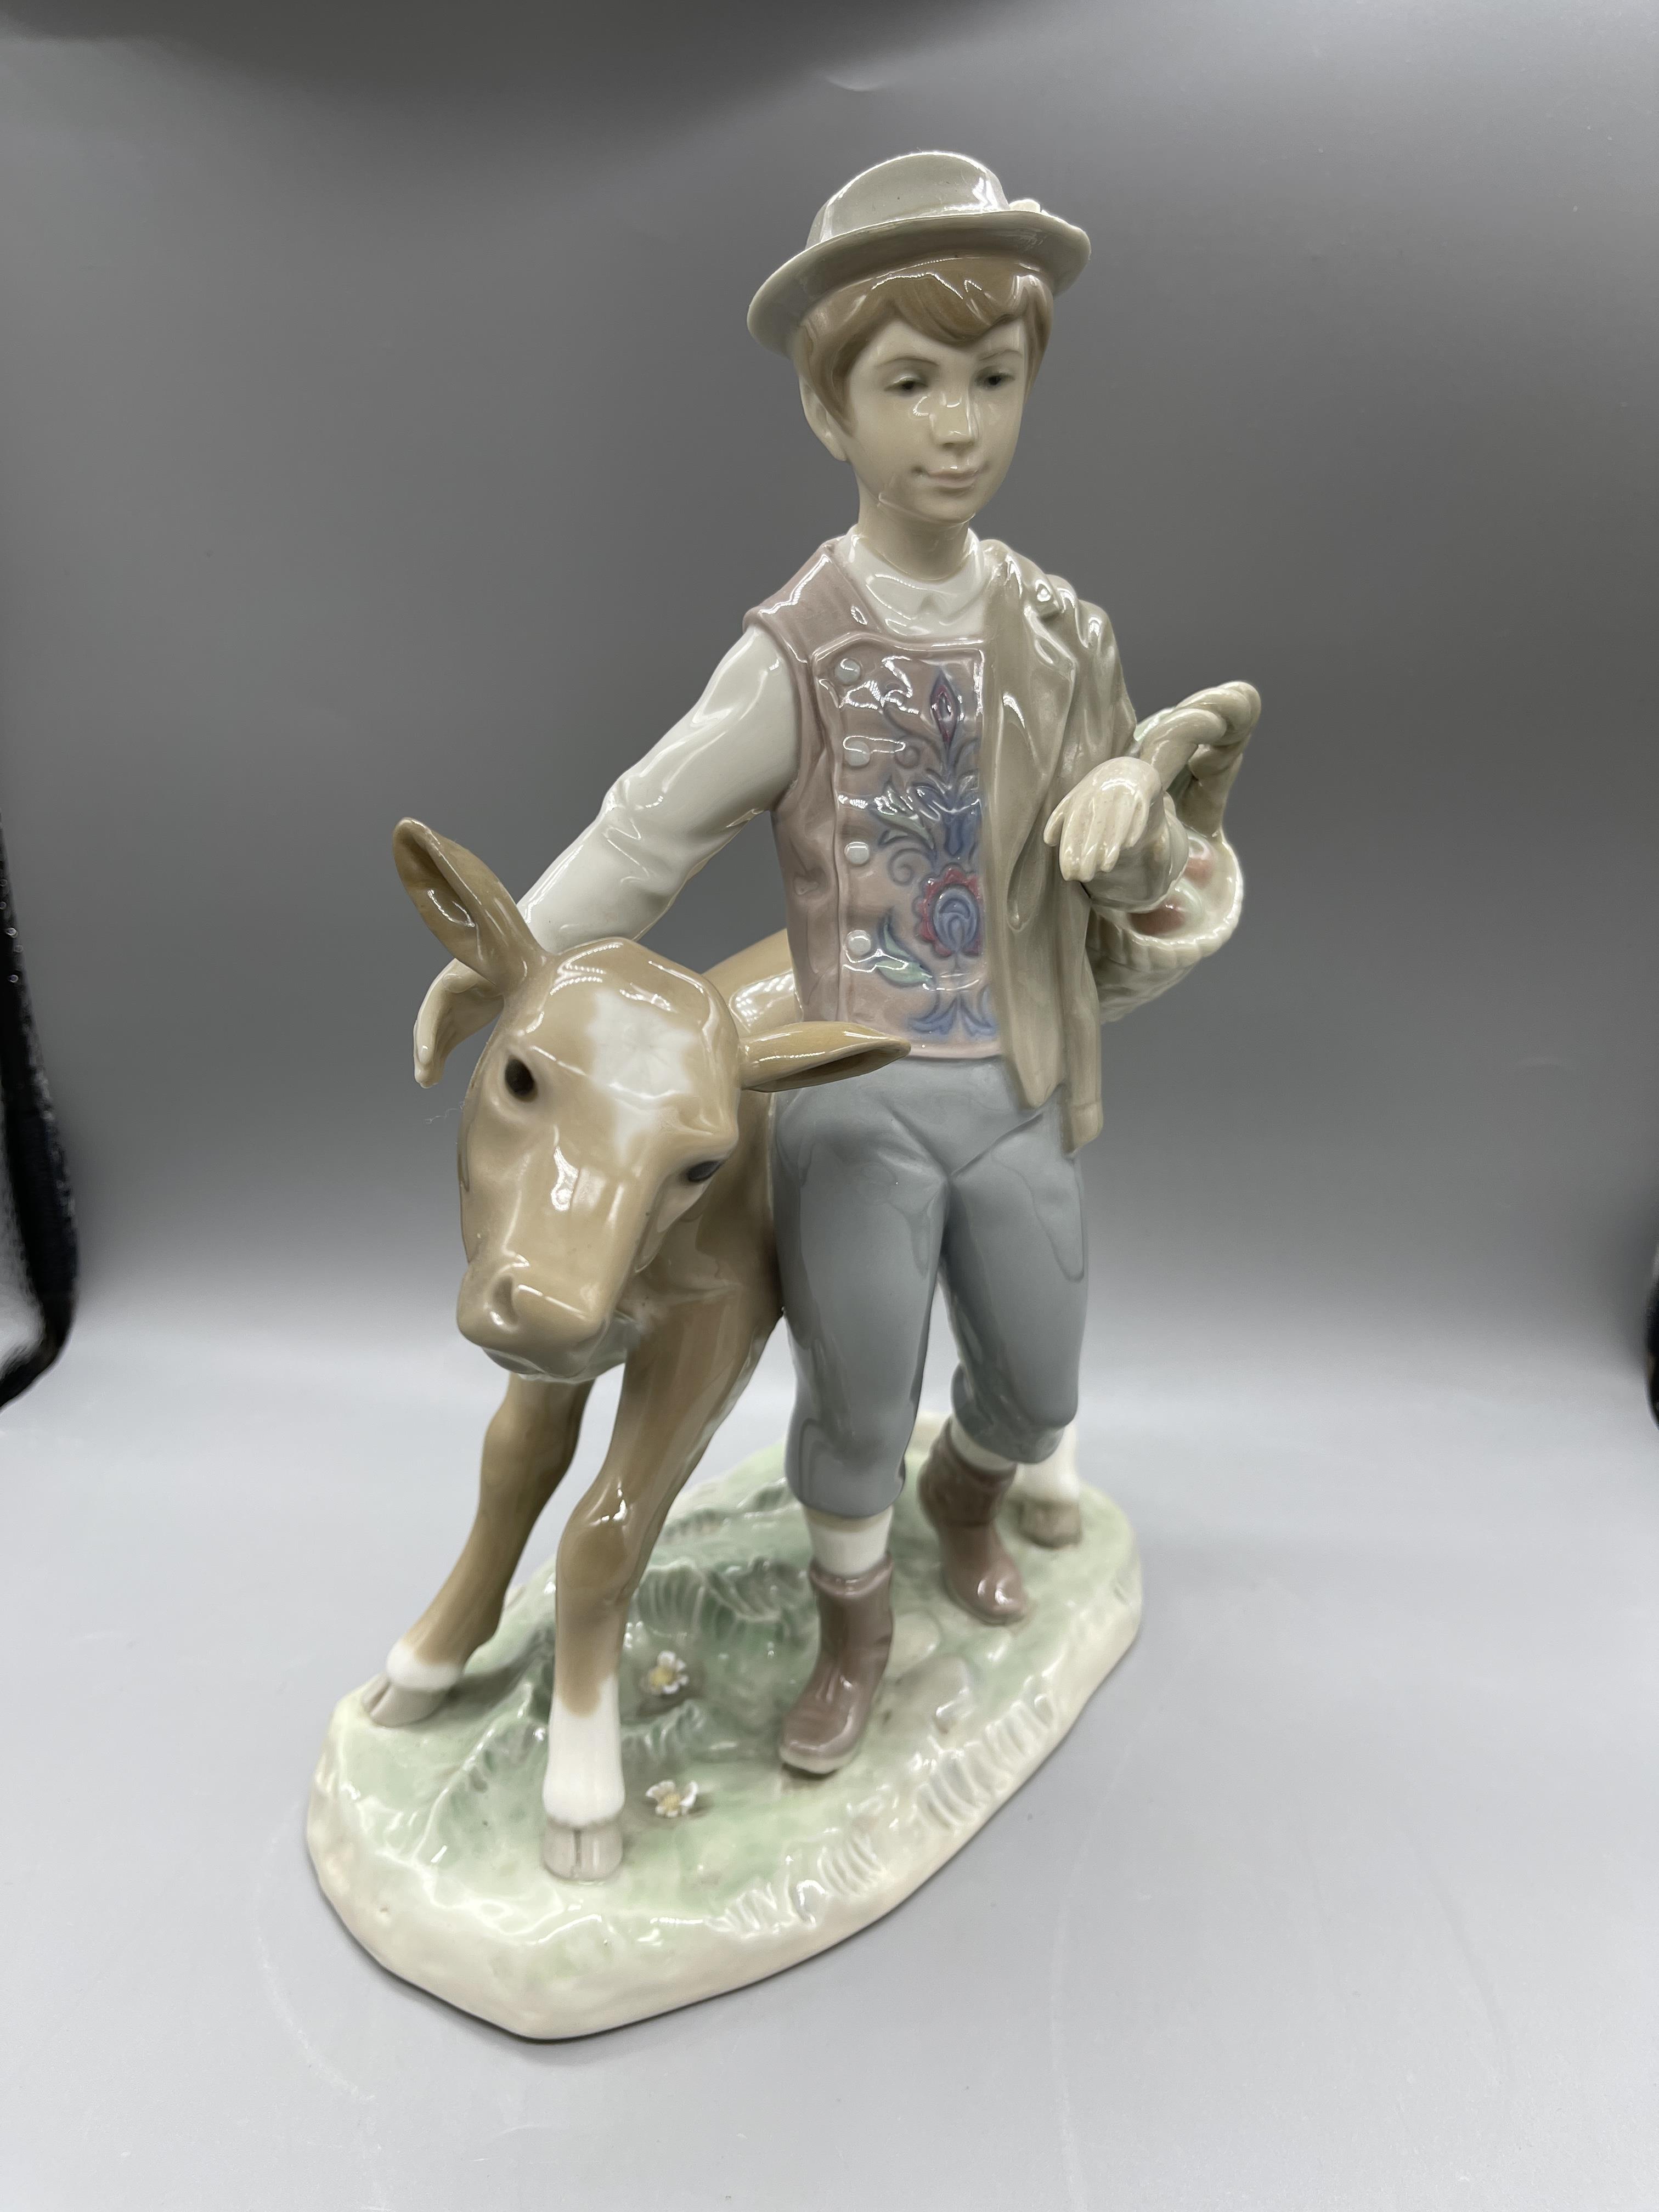 Taking cow to market, Lladro figureLladro boy and - Image 6 of 8